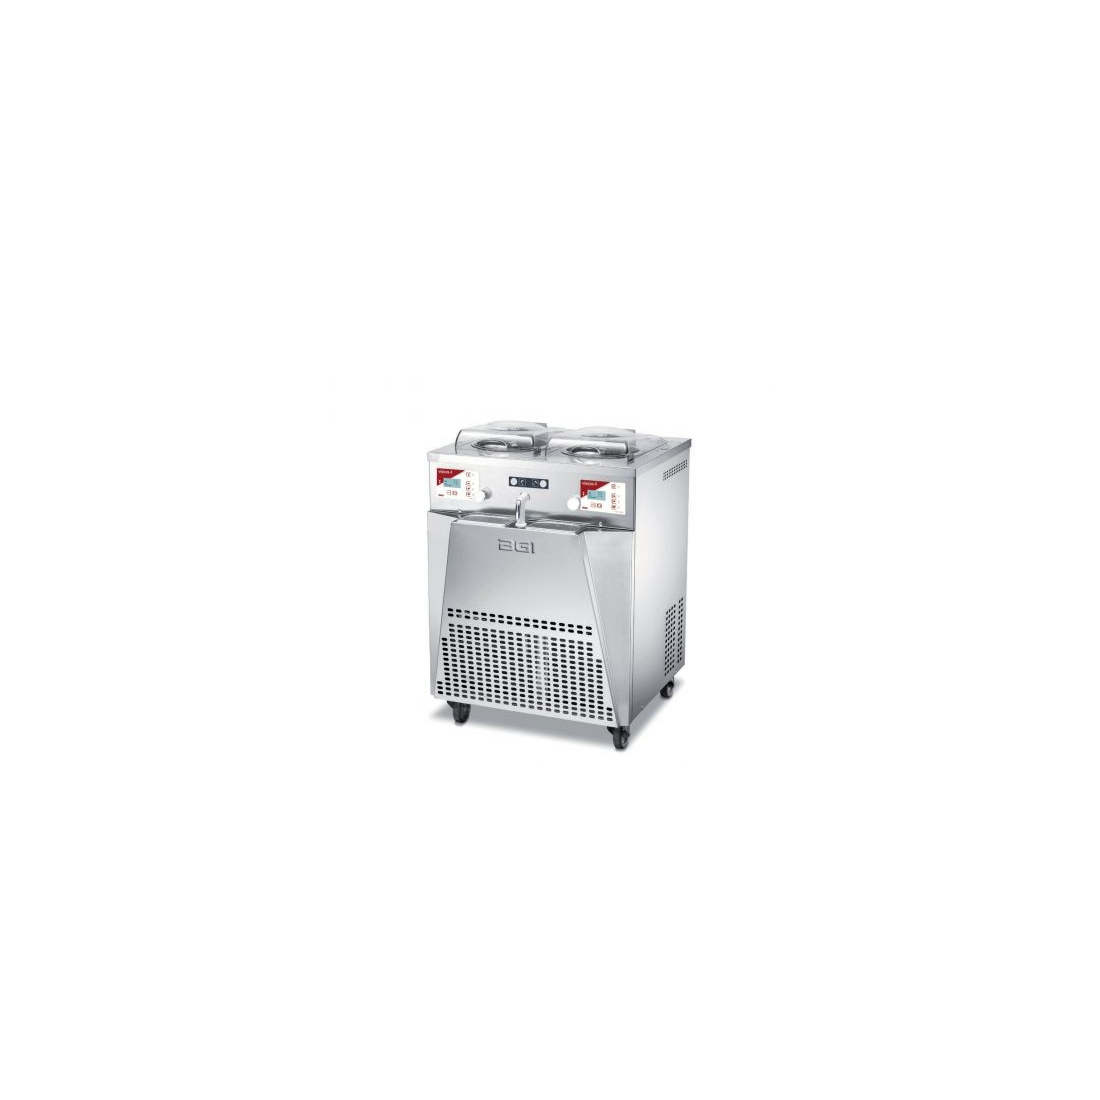 ICETEAM (BGI Vision 4) Batch Freezer And Display Unit|mkayn|مكاين